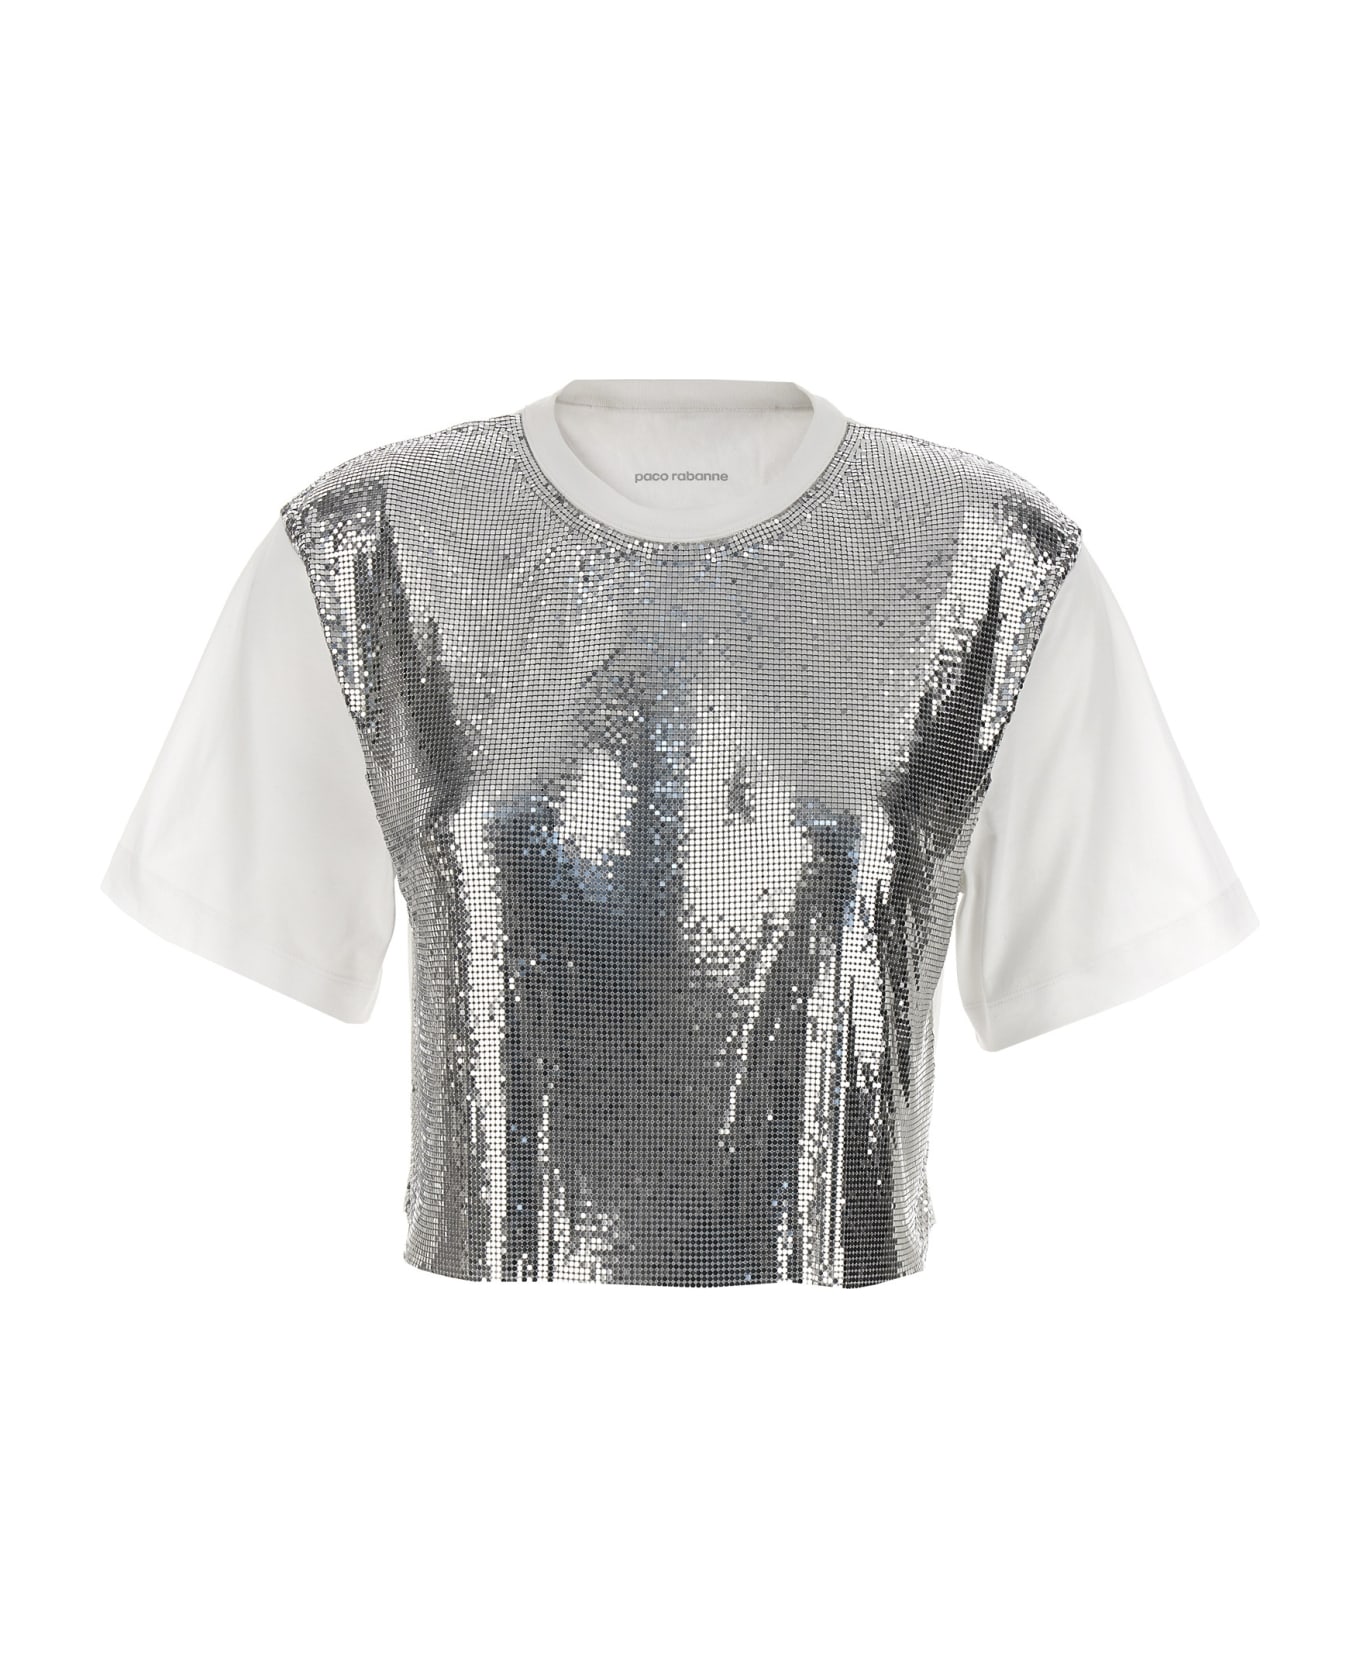 Paco Rabanne Metal Mesh T-shirt - Silver White